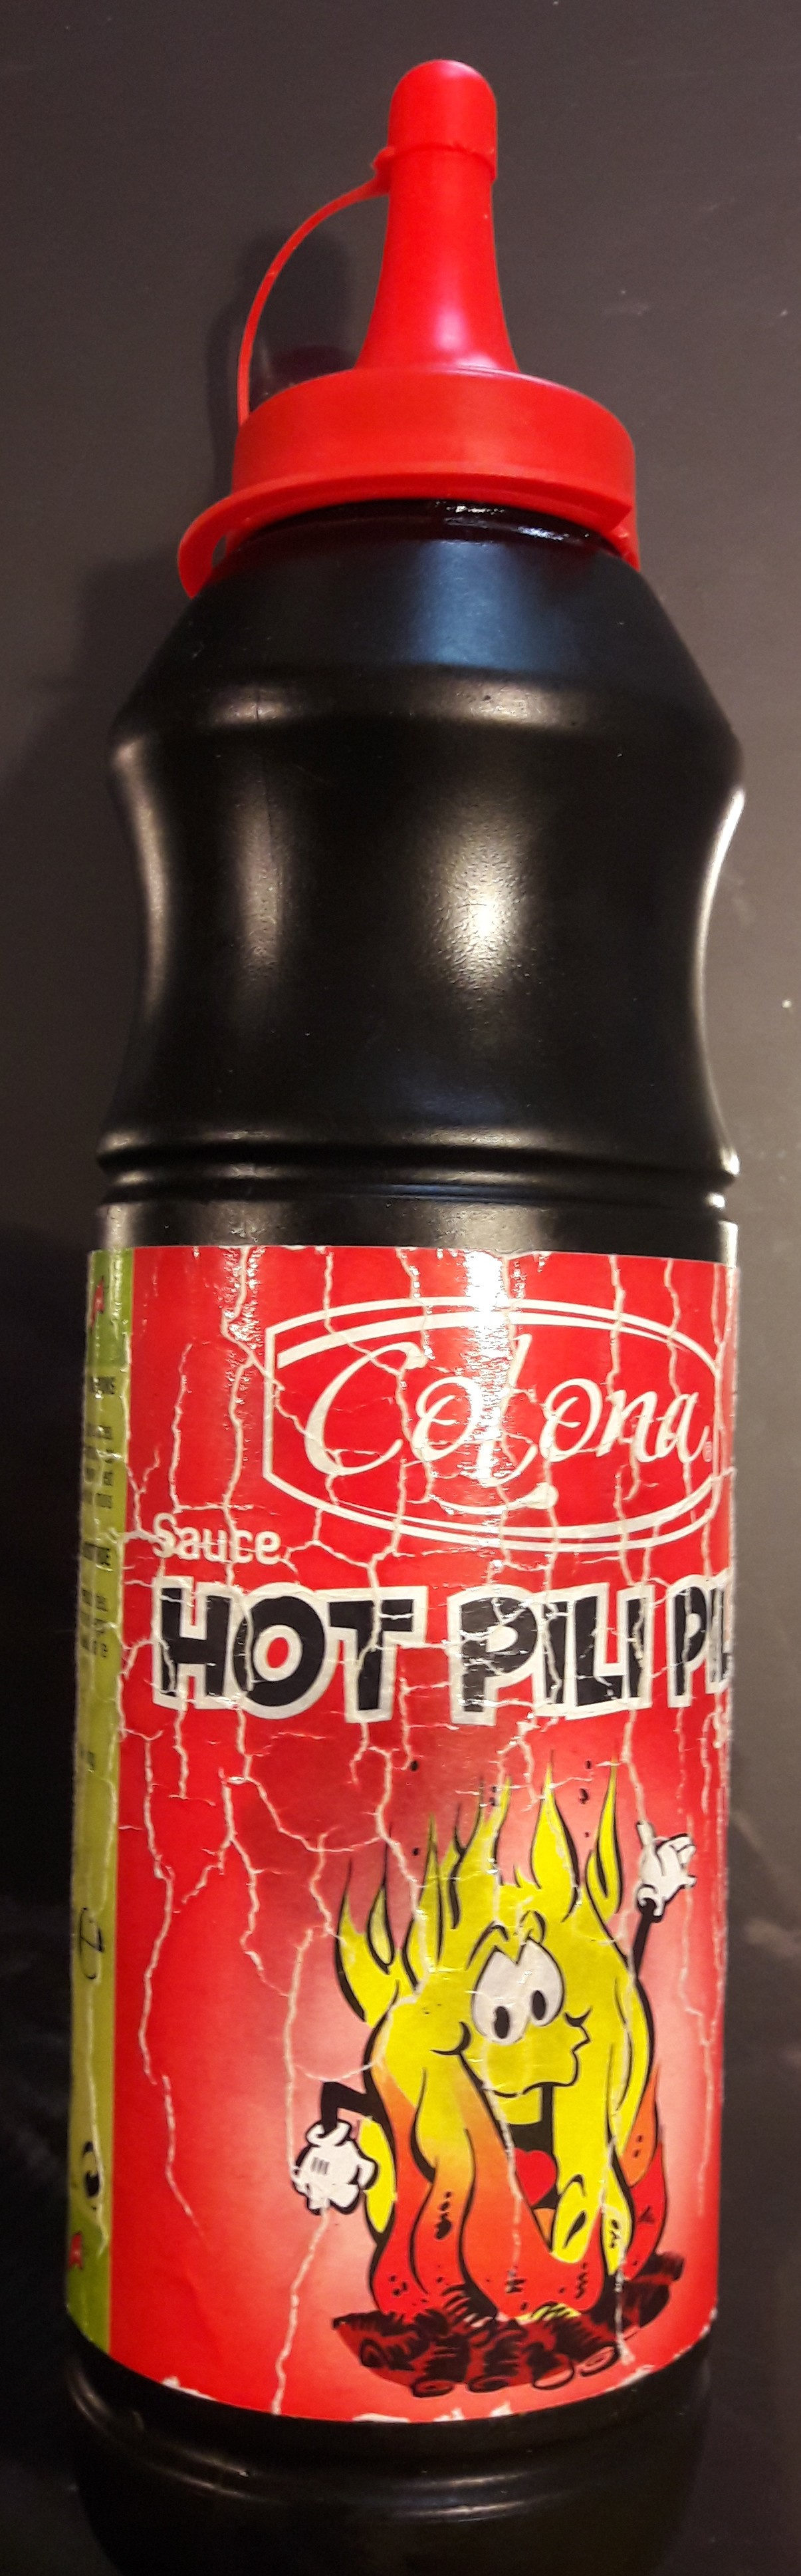 Colona sauce hot pili pilitube - Produit